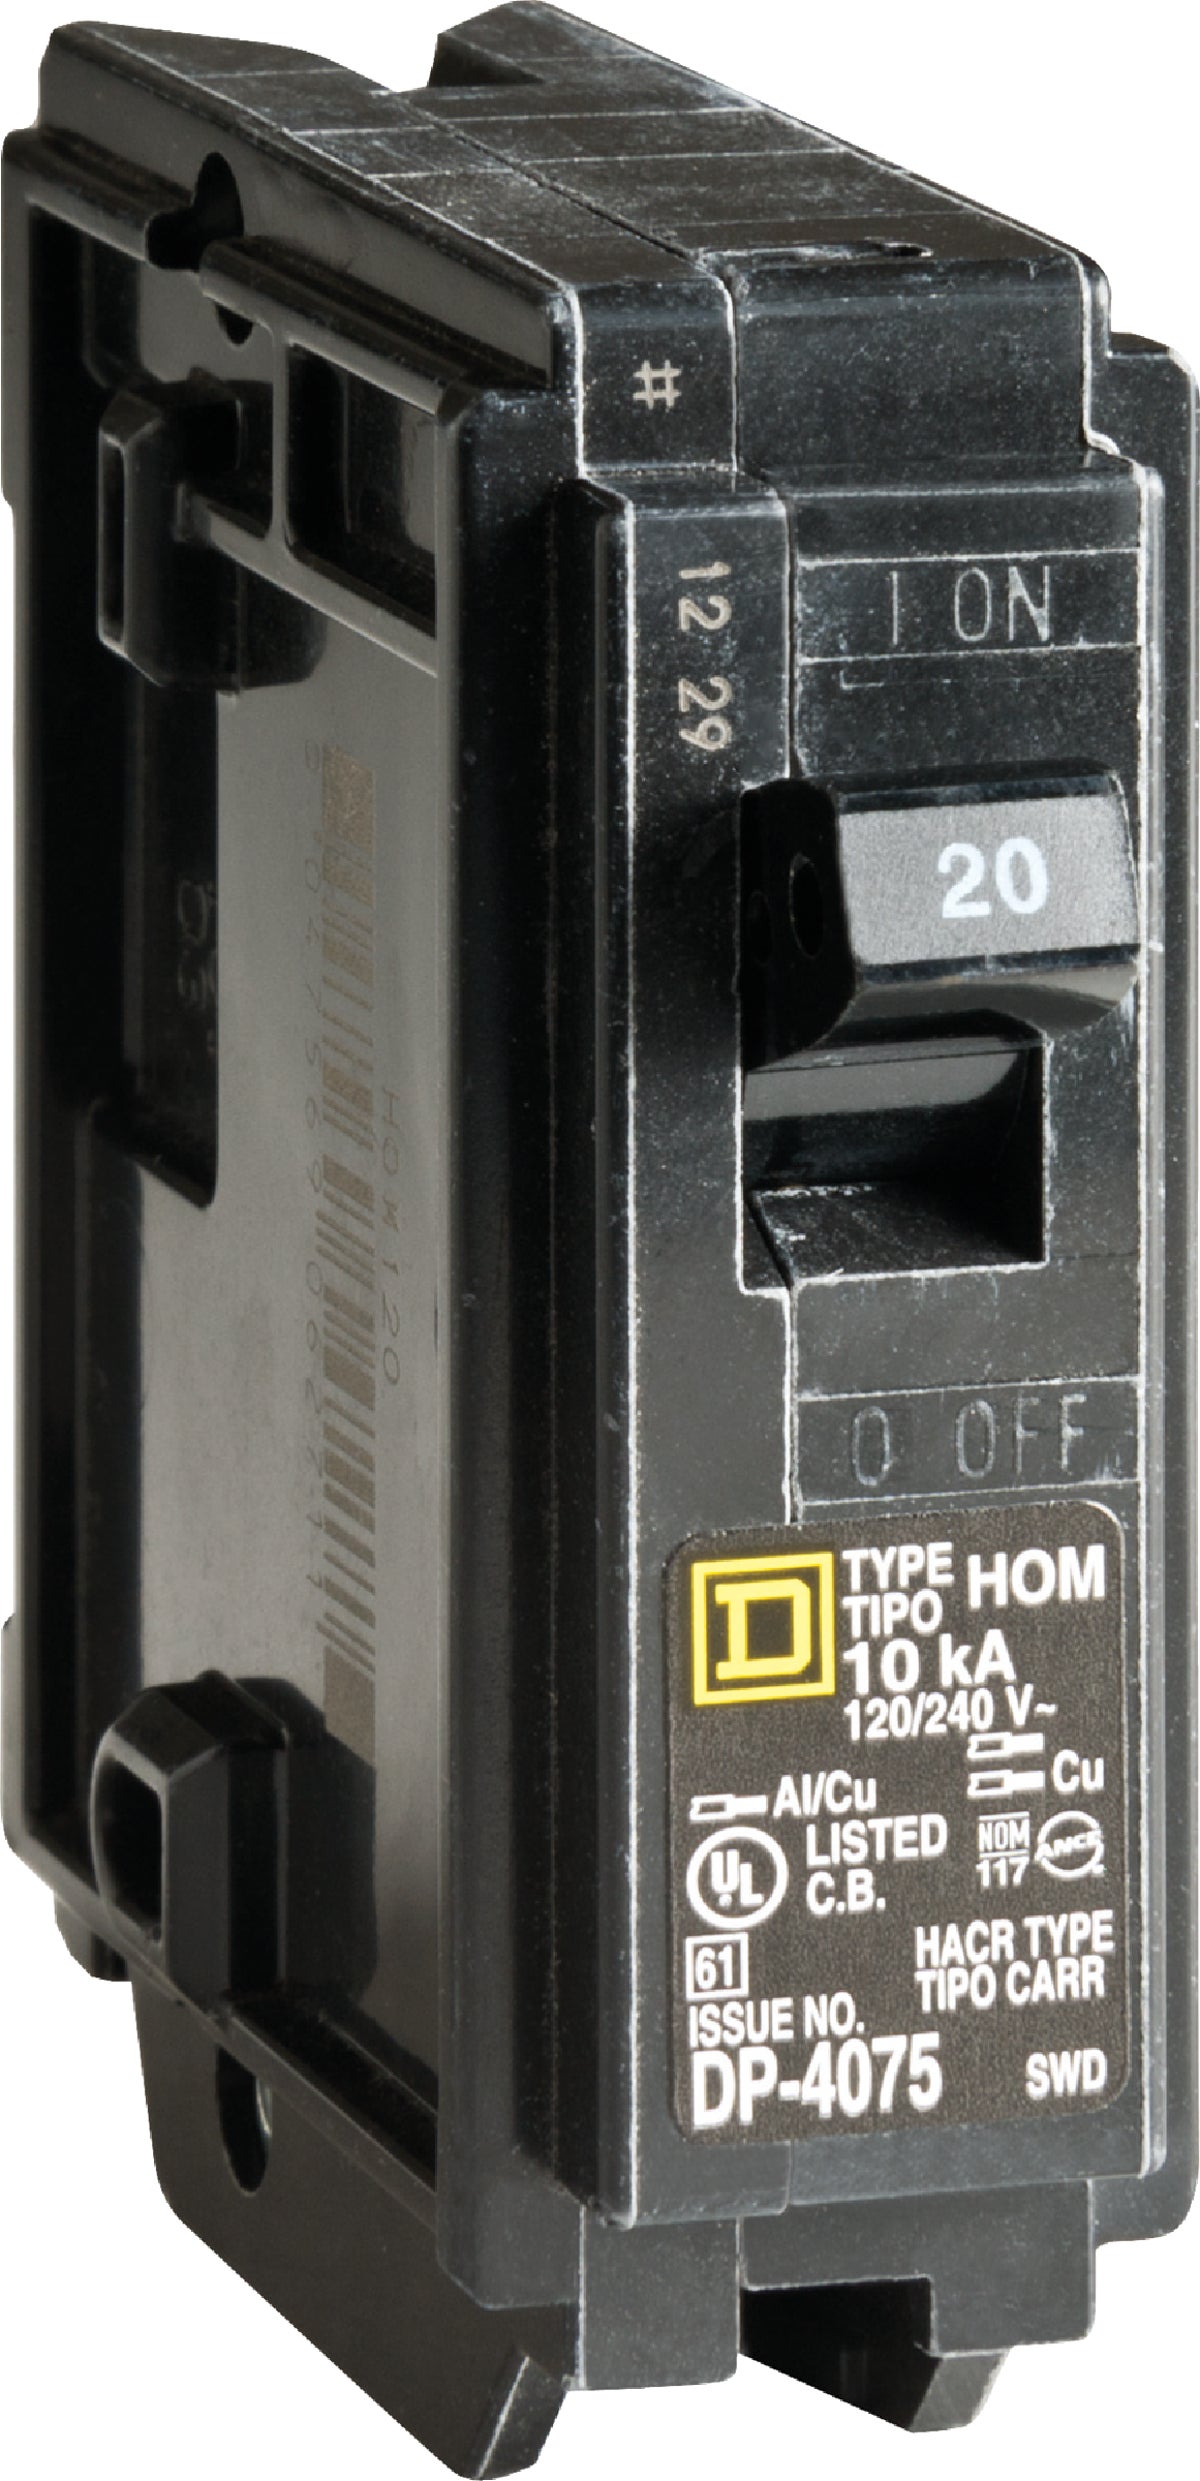 buy-square-d-homeline-circuit-breaker-20a